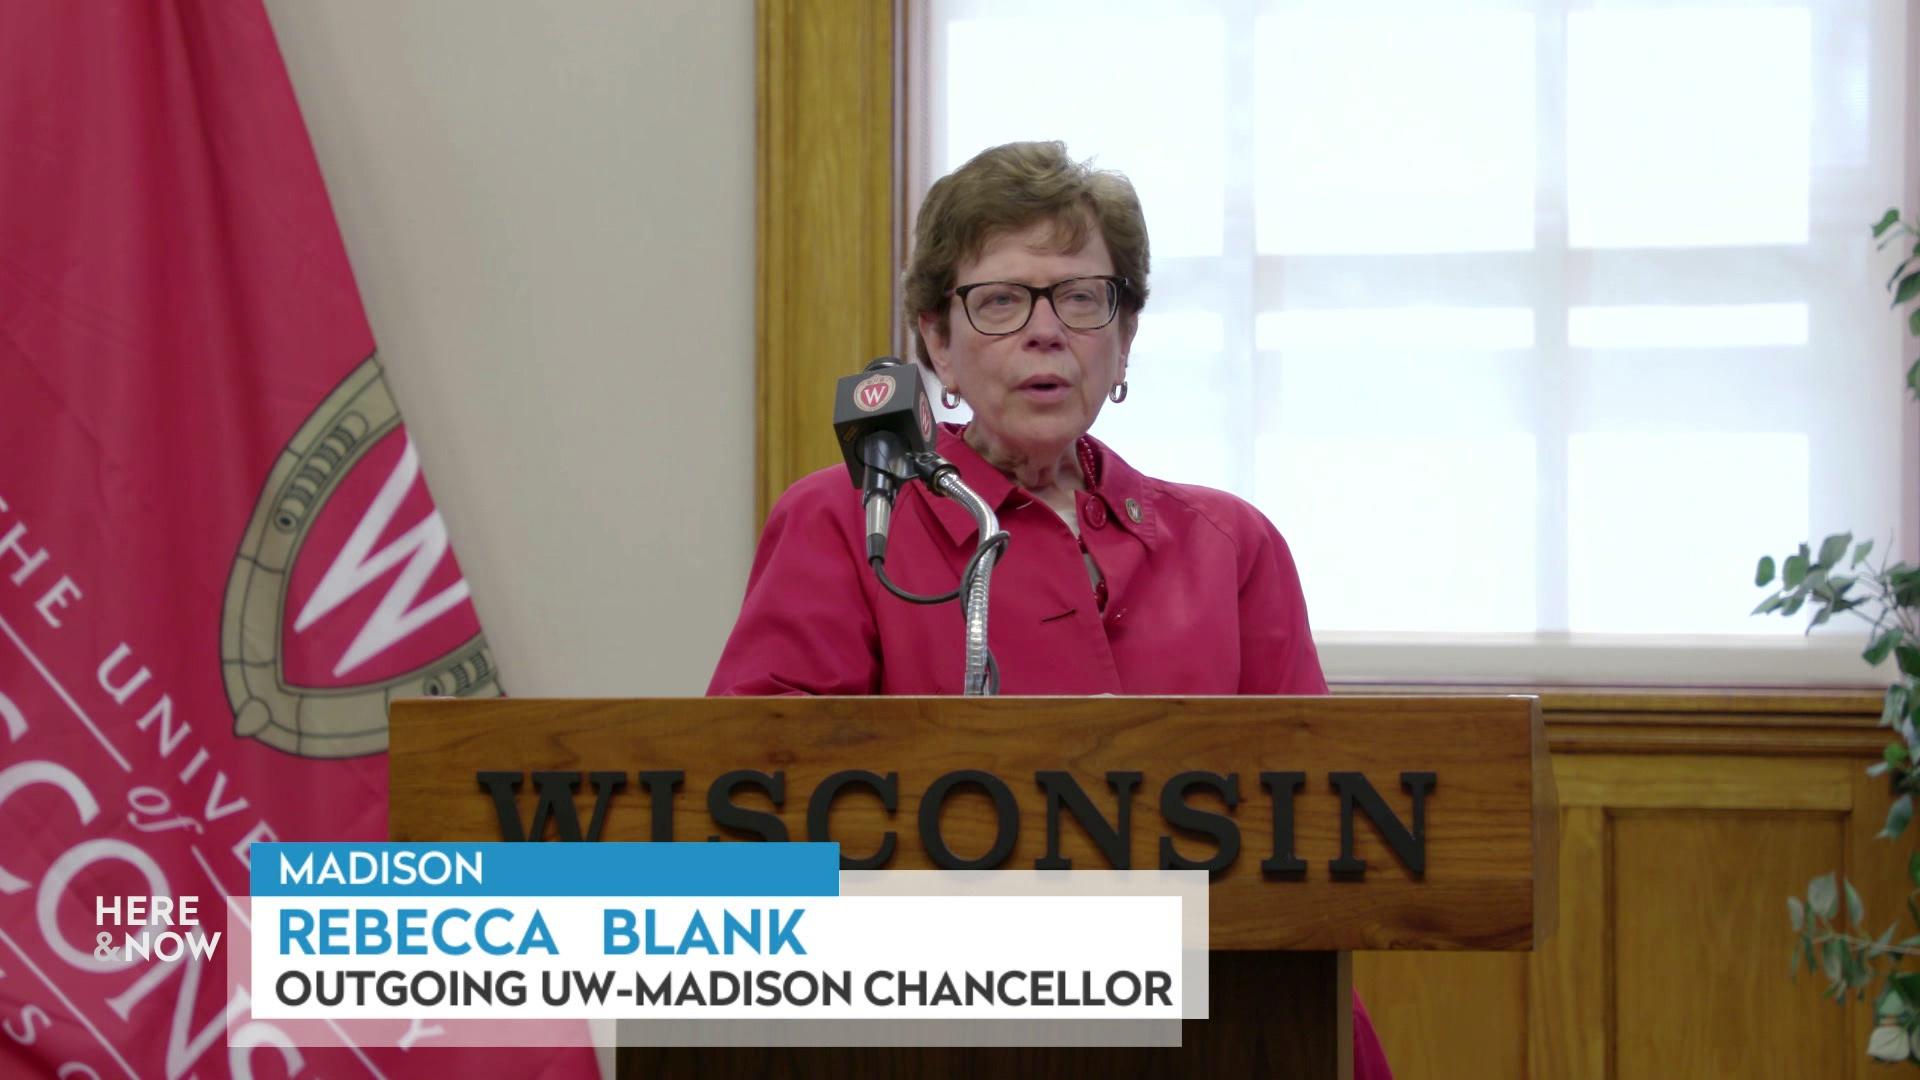 Chancellor Rebecca Blank bids farewell to UW-Madison